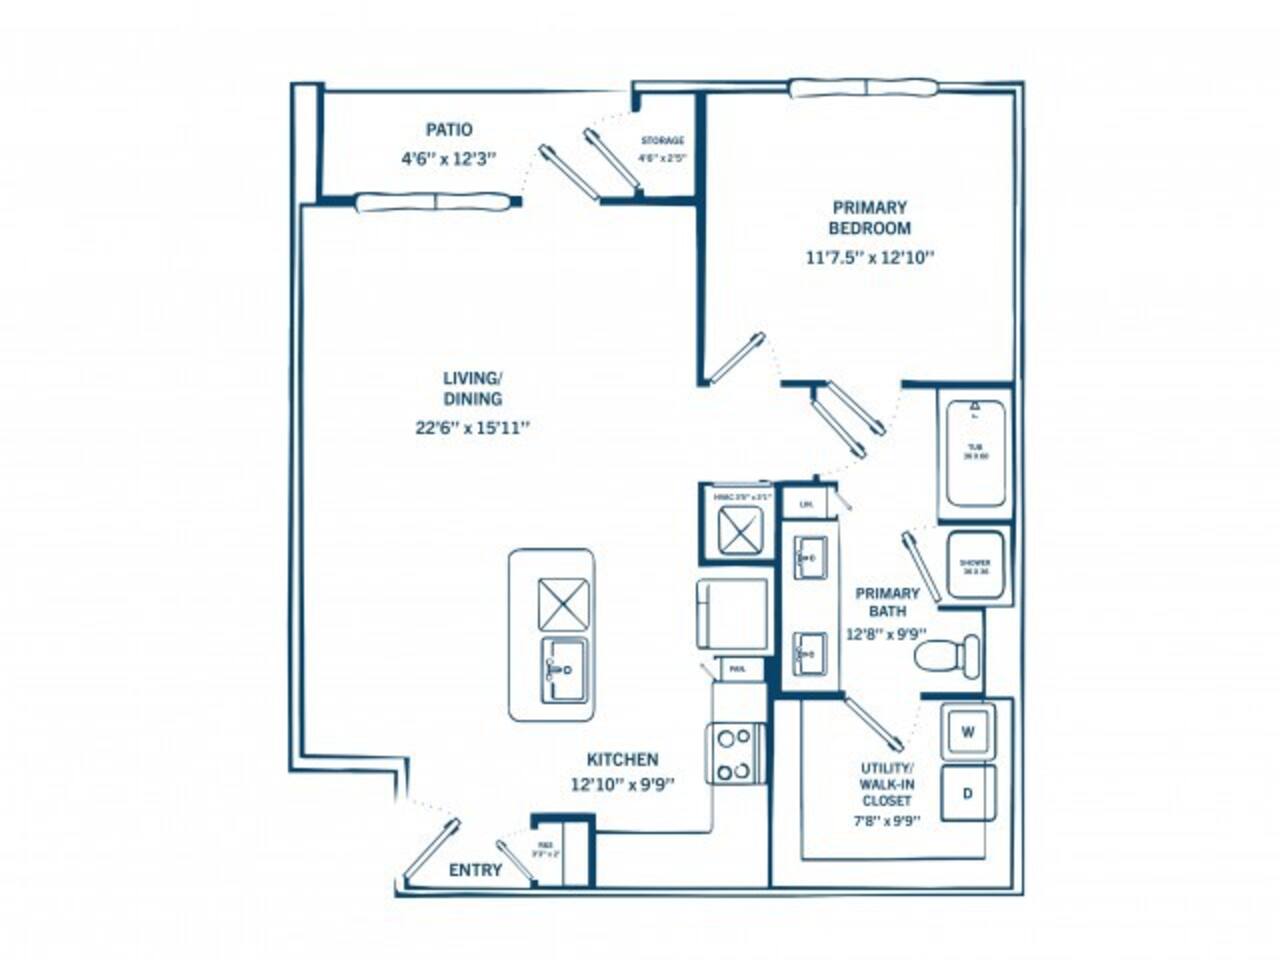 Floorplan diagram for A2B, showing 1 bedroom